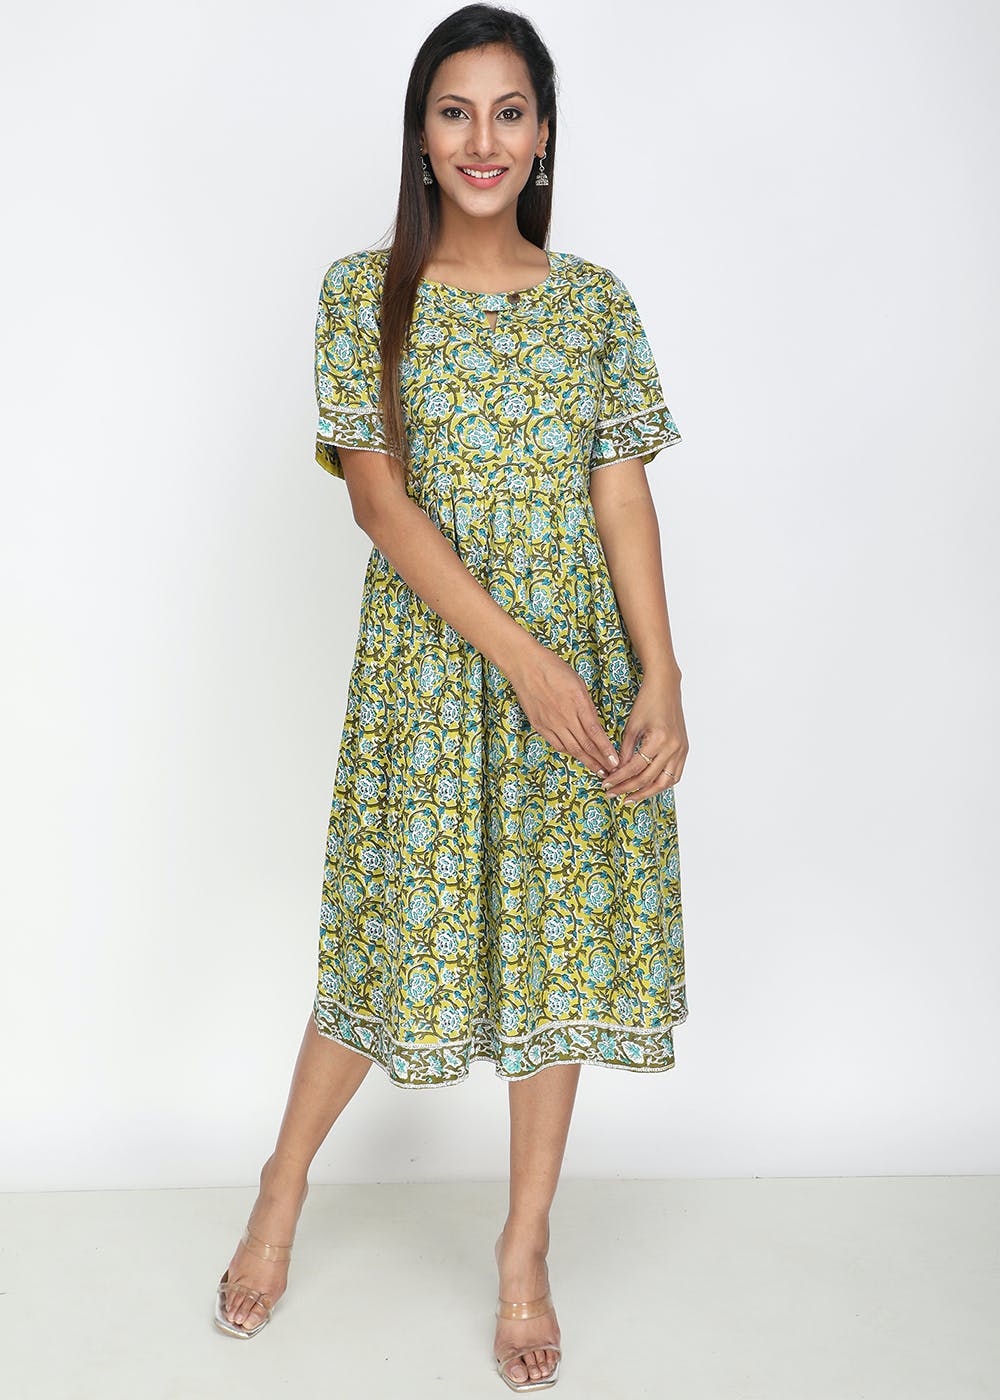 Get Floral Printed Parrot Green Dress at ₹ 1250 | LBB Shop